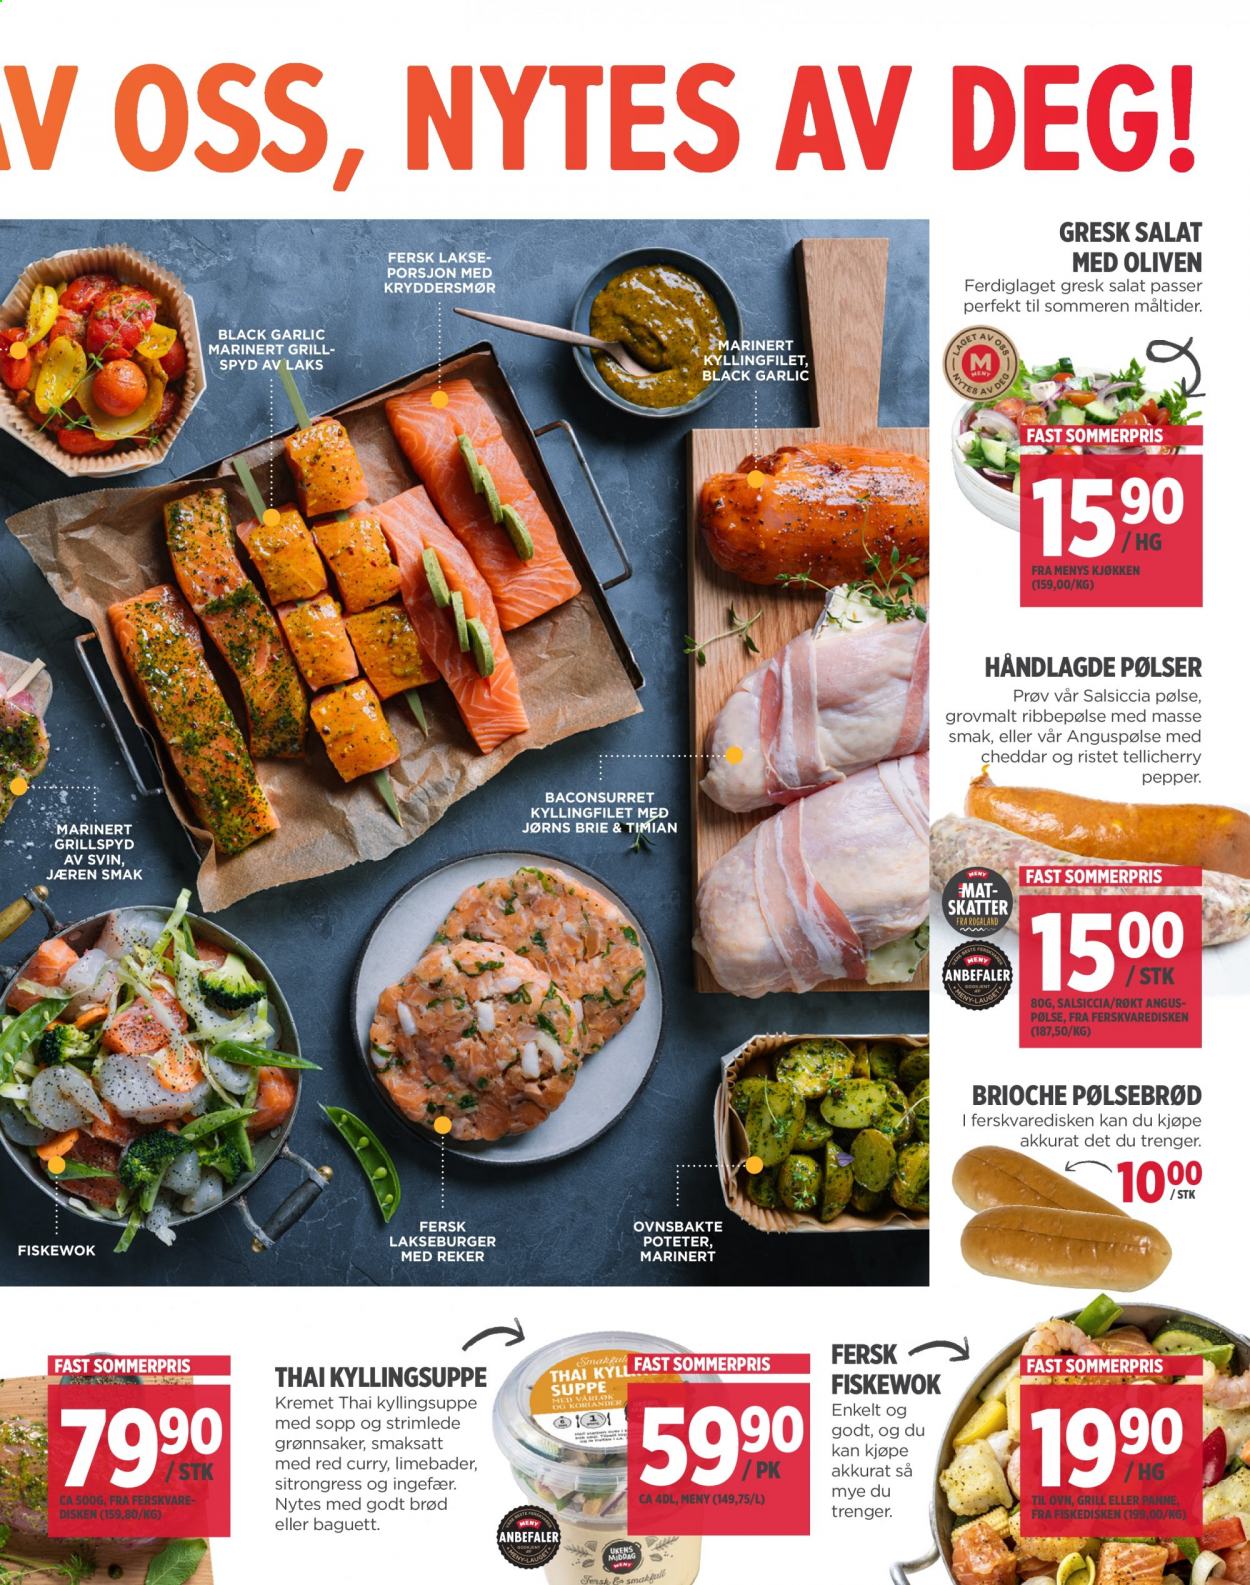 thumbnail - Kundeavis MENY - 12.7.2021 - 17.7.2021 - Produkter fra tilbudsaviser - kyllingfilet, kyllingkjøtt, salat, brioche, brød, pølse, oliven, brie, Cheddar, curry. Side 15.